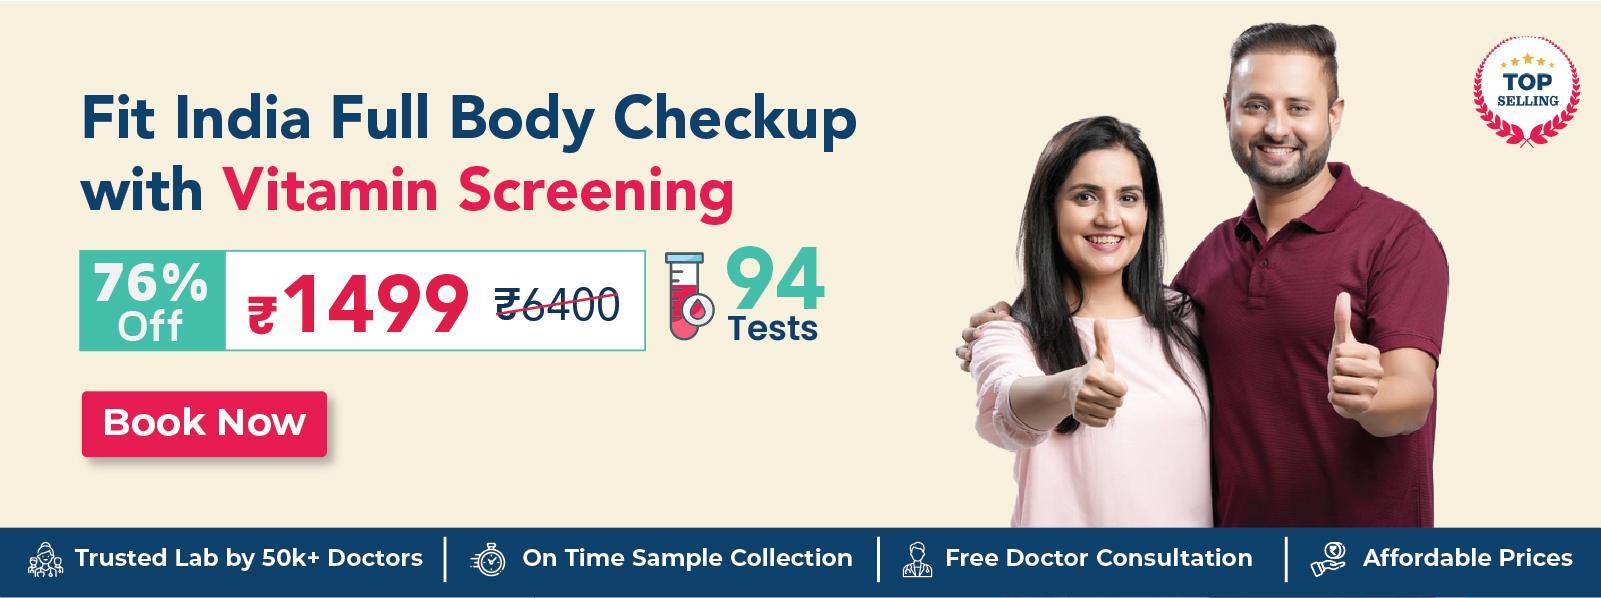 Fit India Full Body checkup with Vitamin Screening in Noida